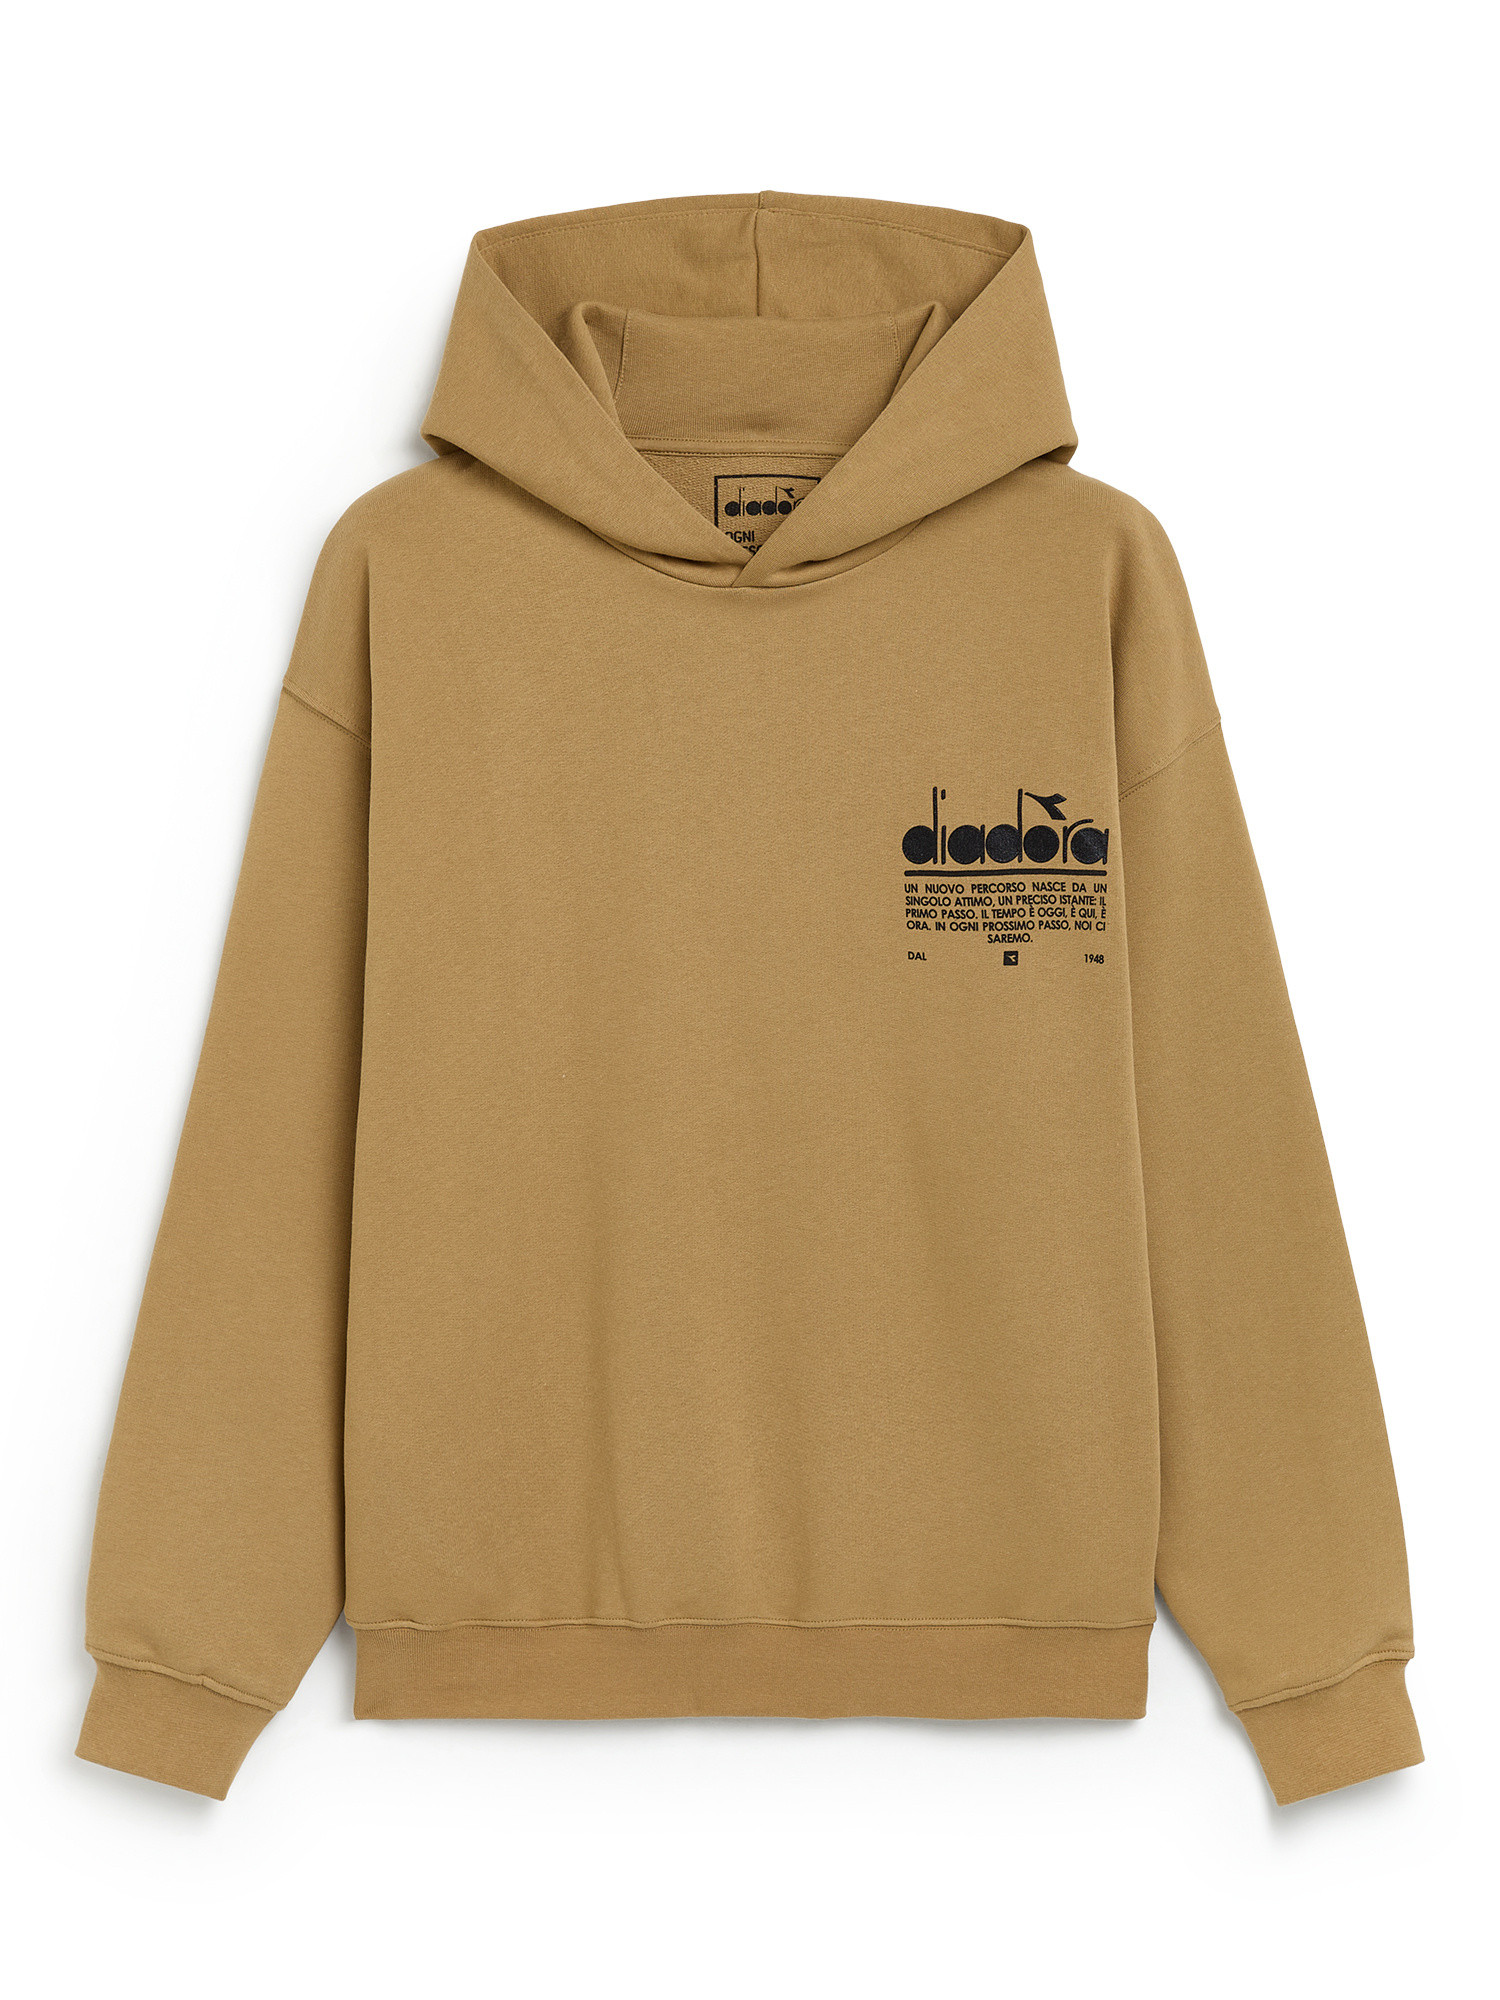 Diadora - Manifesto cotton hoodie, Beige, large image number 0